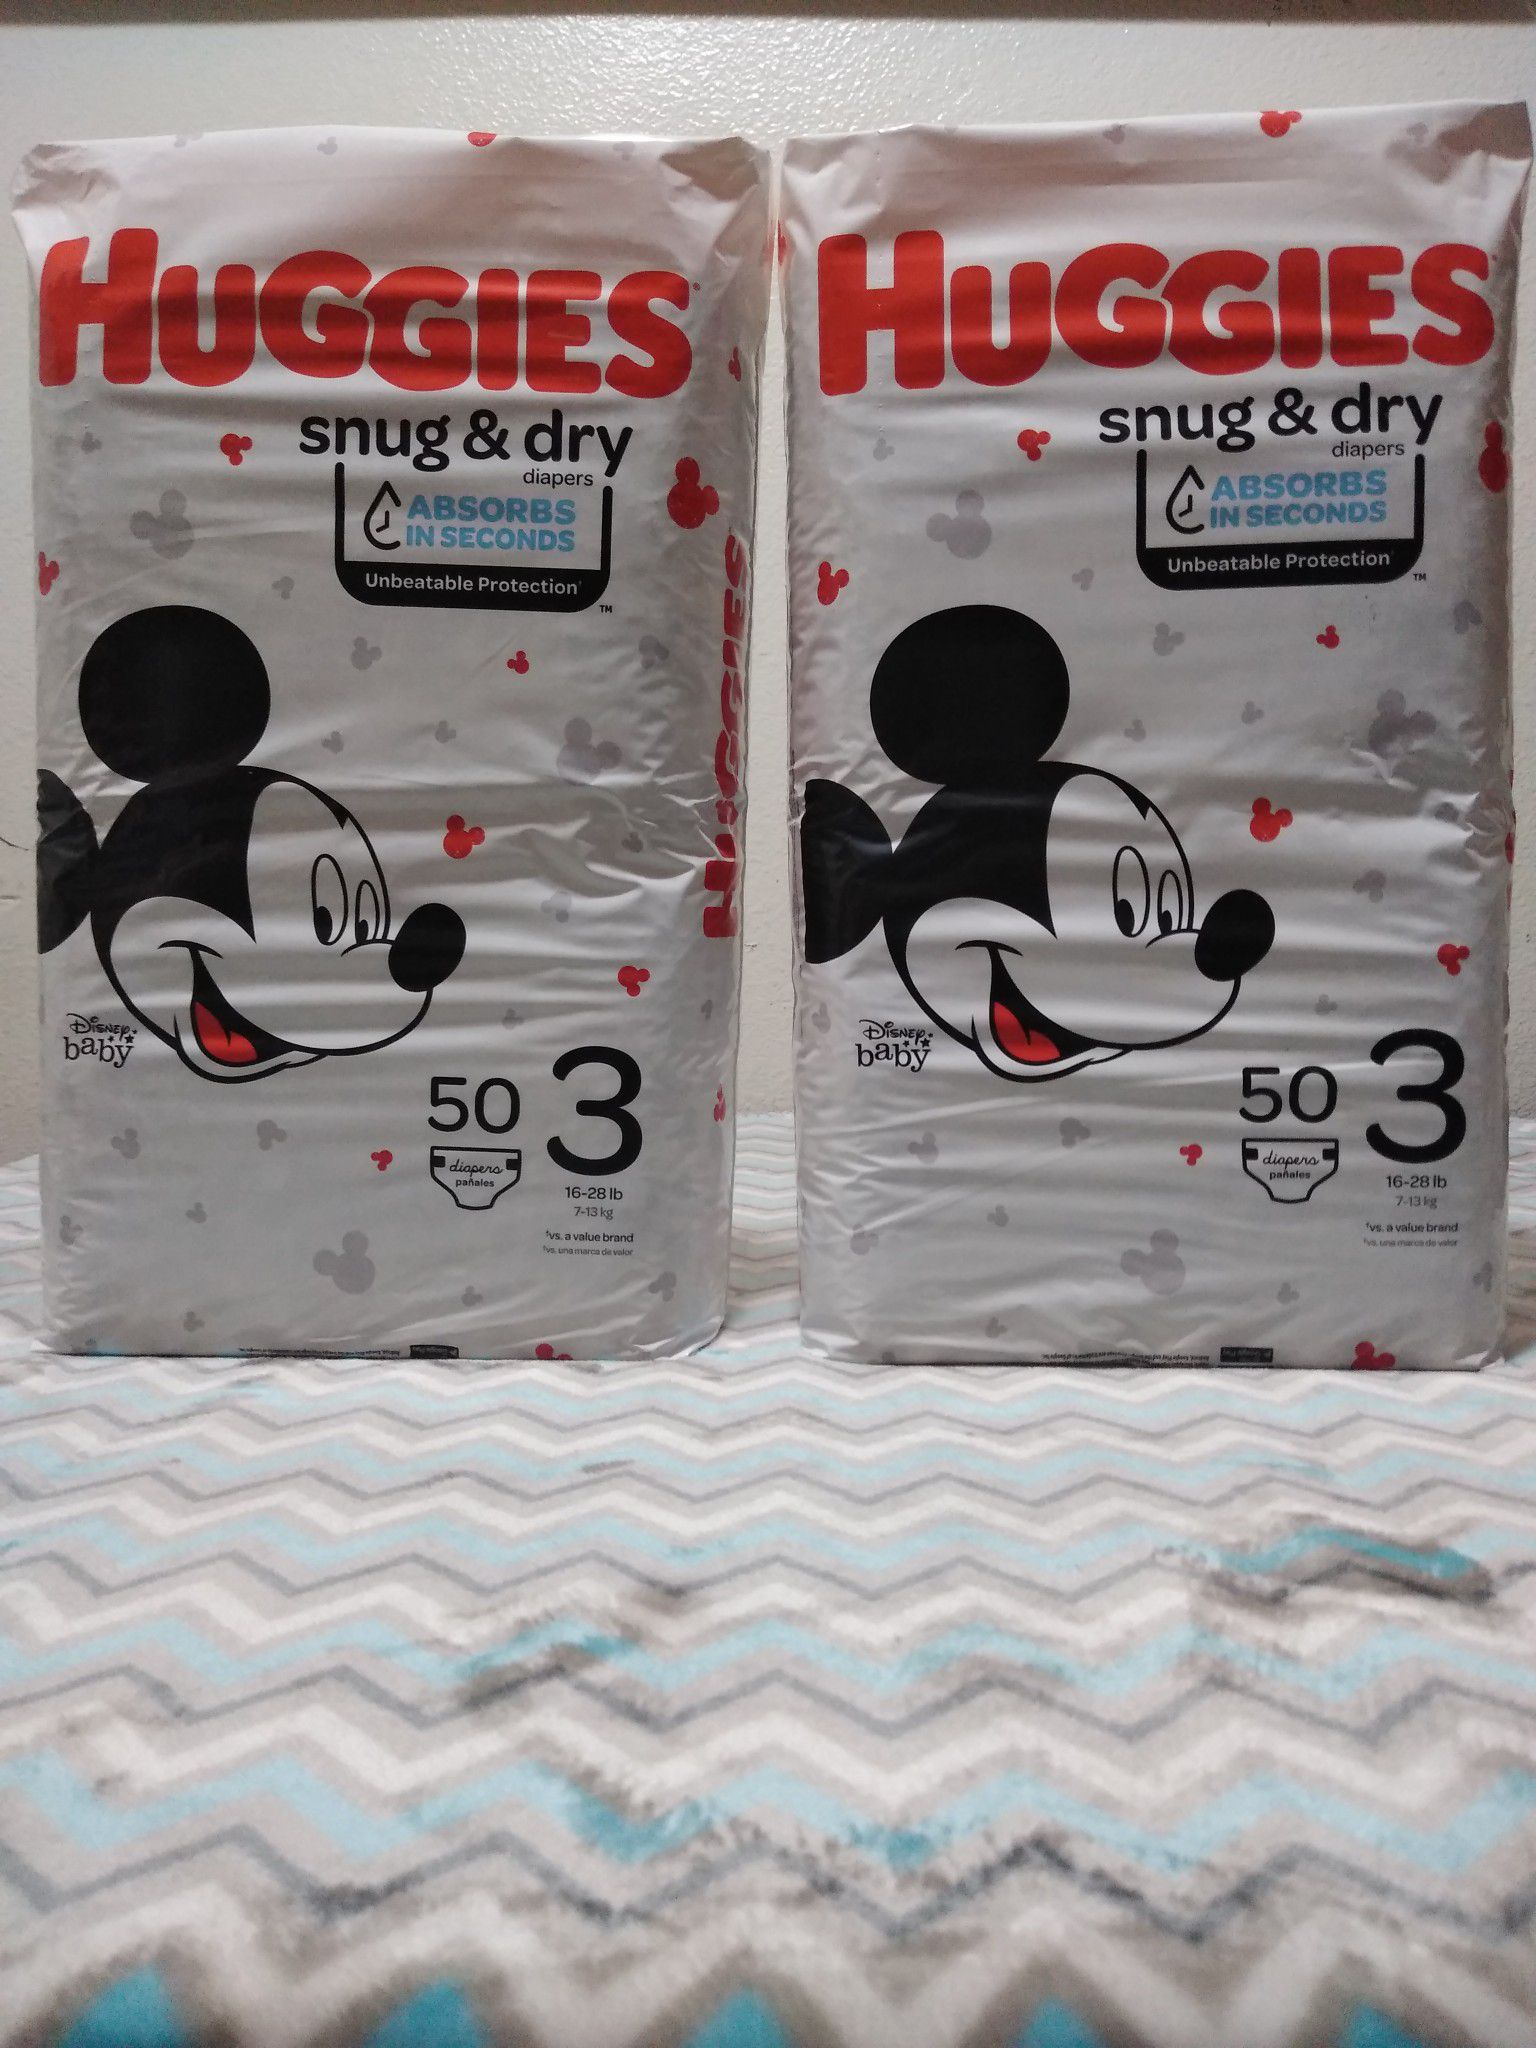 Huggies snug &dry size 3